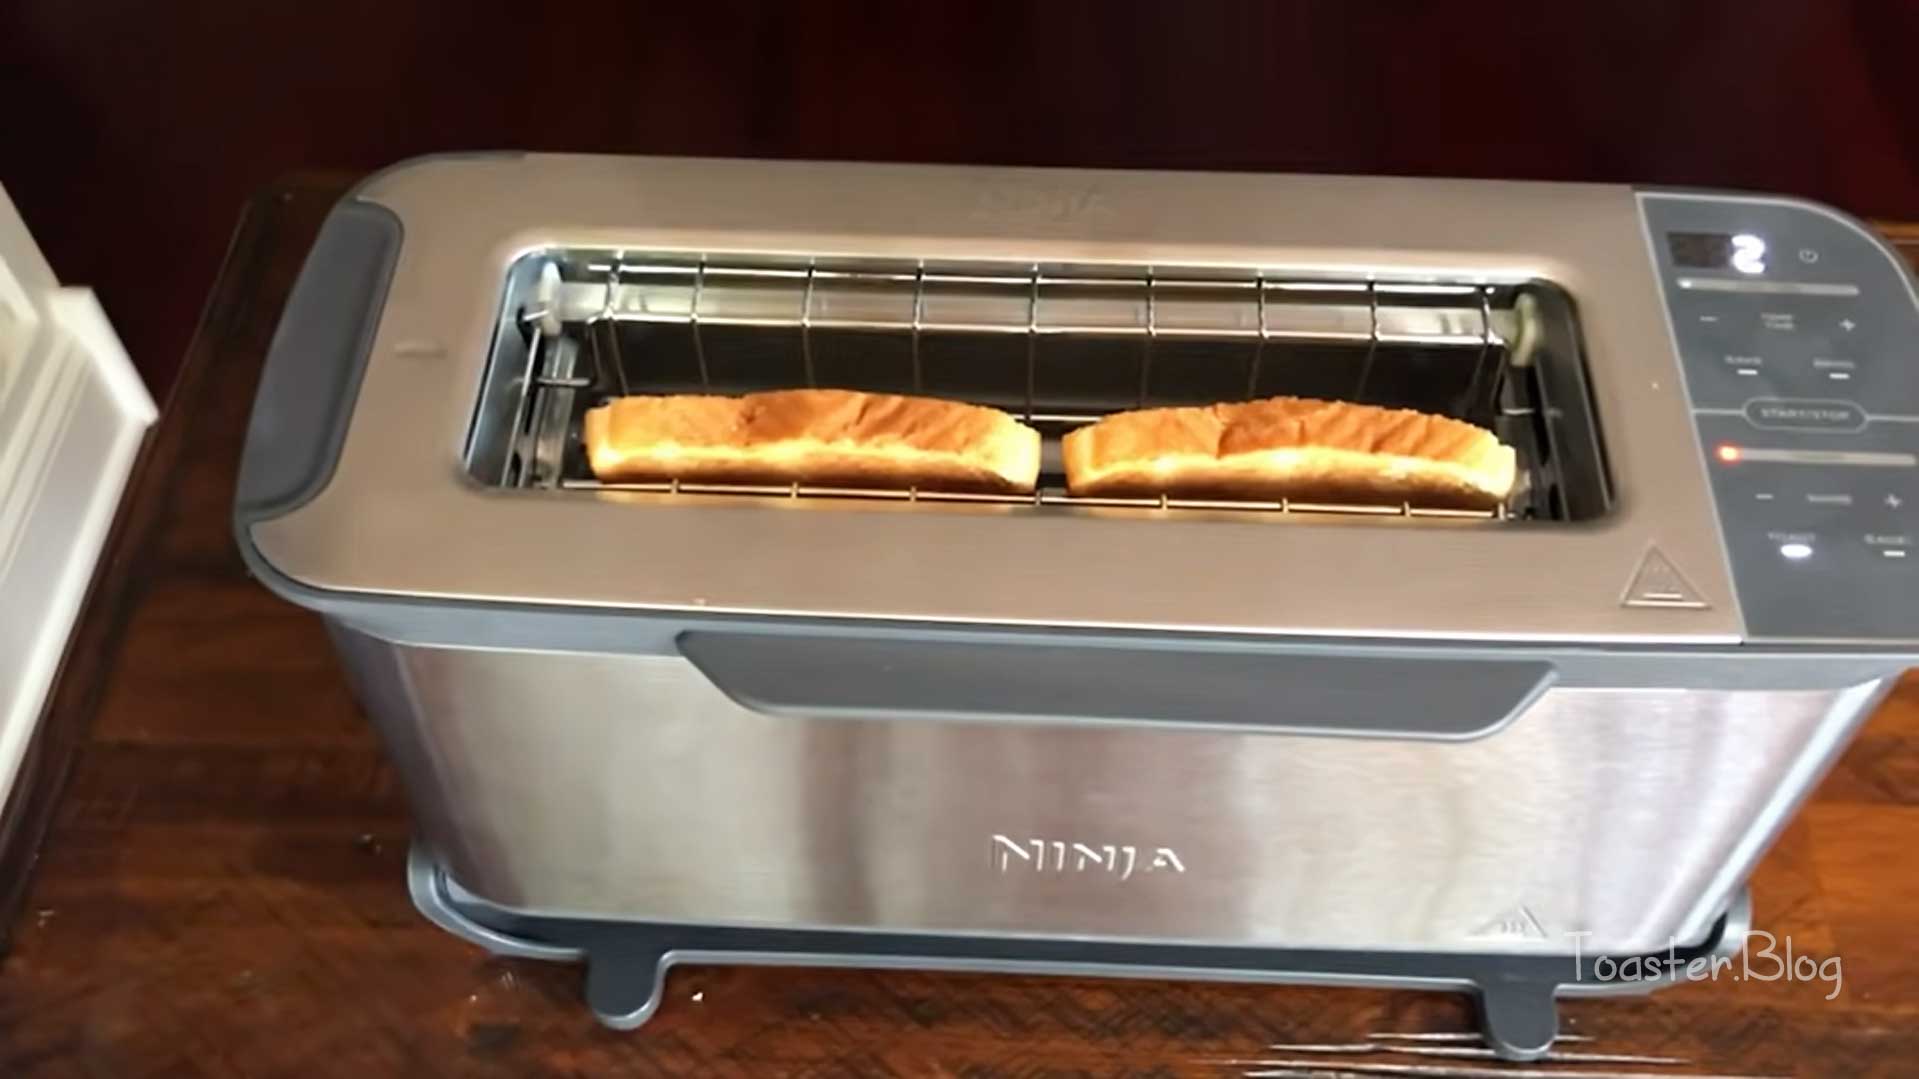 https://toaster.blog/wp-content/uploads/Best-space-saving-toaster-1.jpg